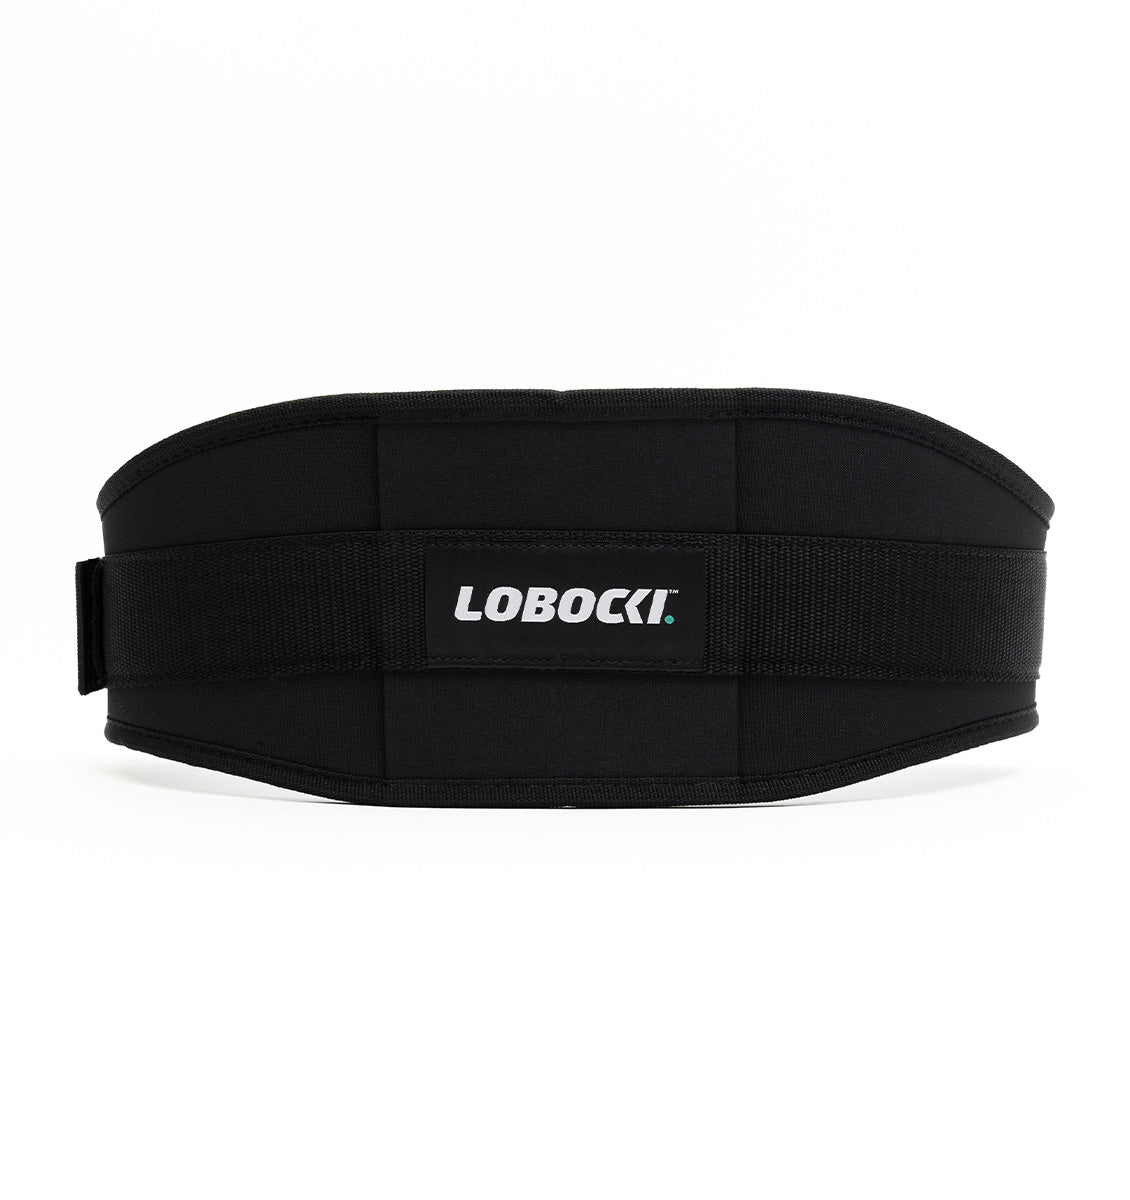 LOBOCKI x Schiek 2006 Contour Weight Lifting Belt - Black - 1